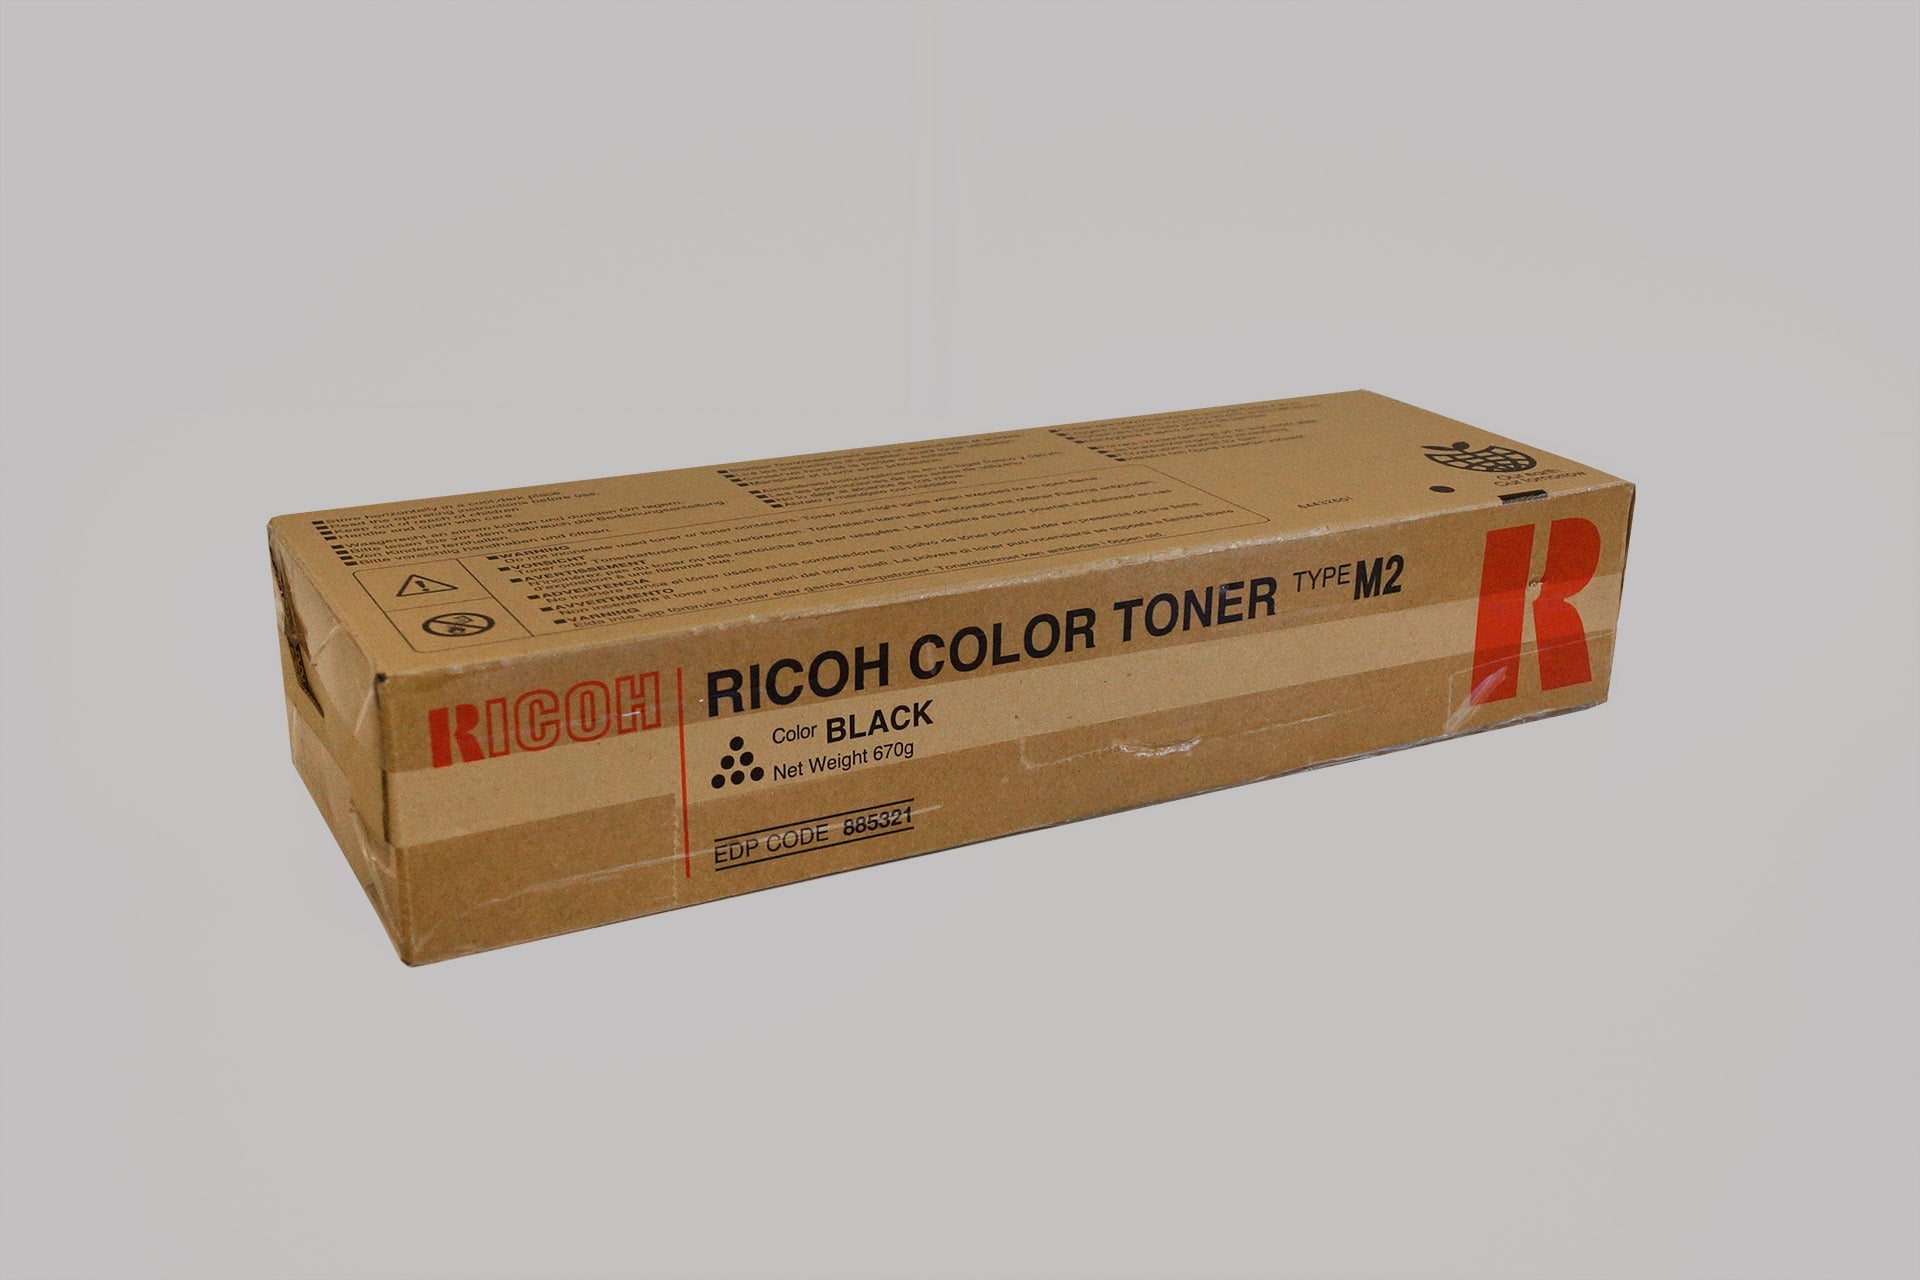 Color Toner Casette 885321 Black